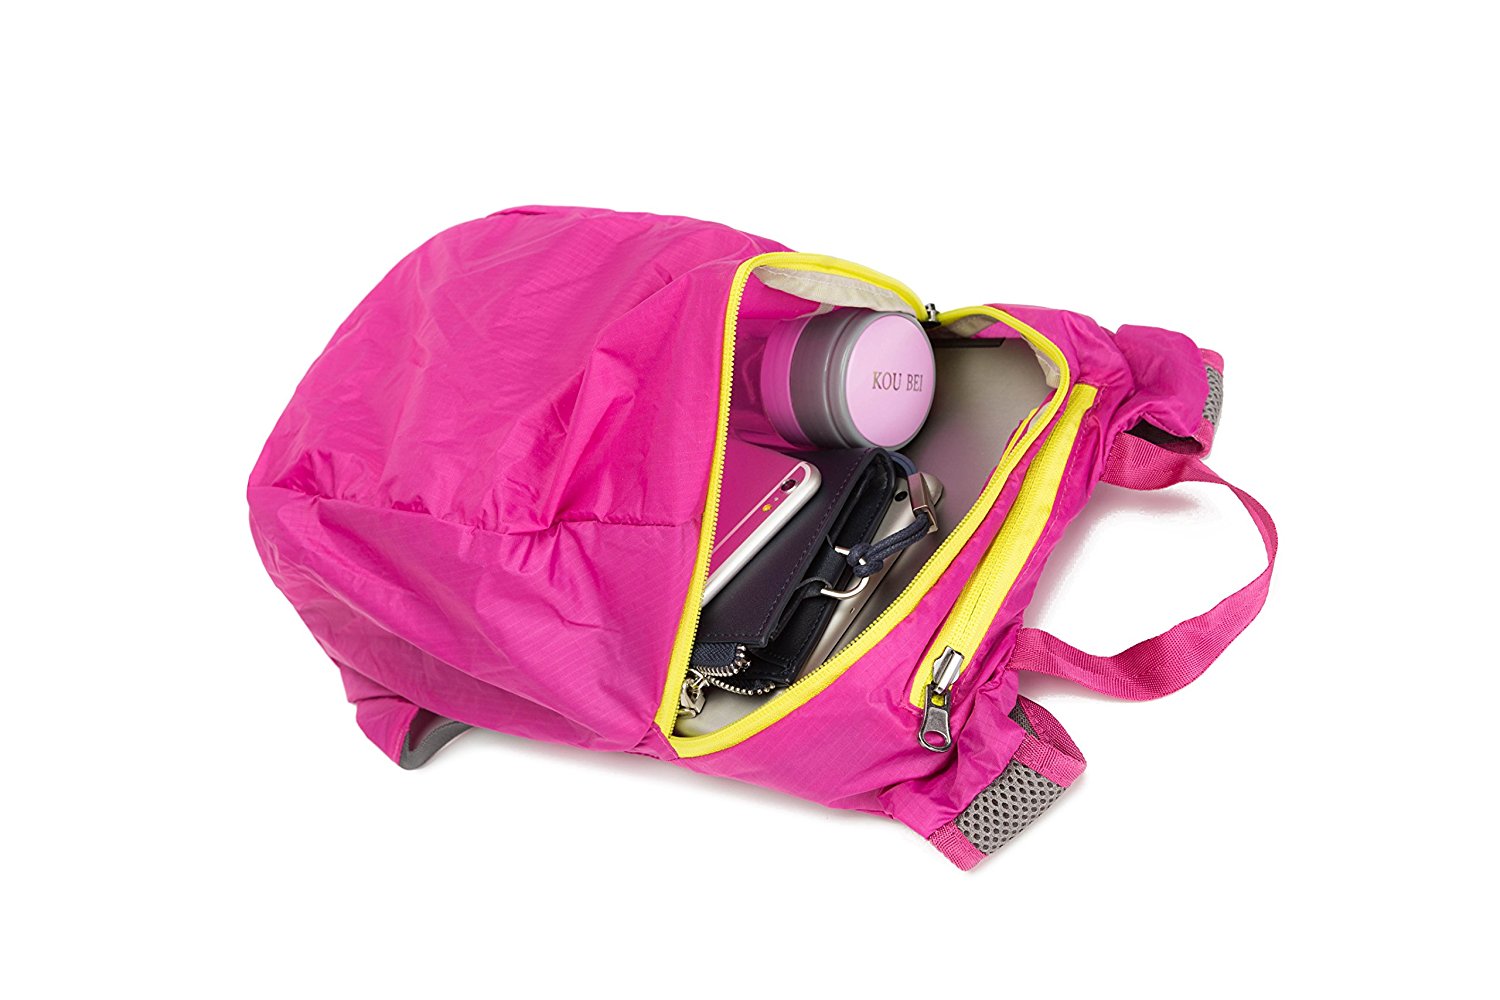 8 Light, Foldable, Waterproof Daypacks Comparison (20L or less ...